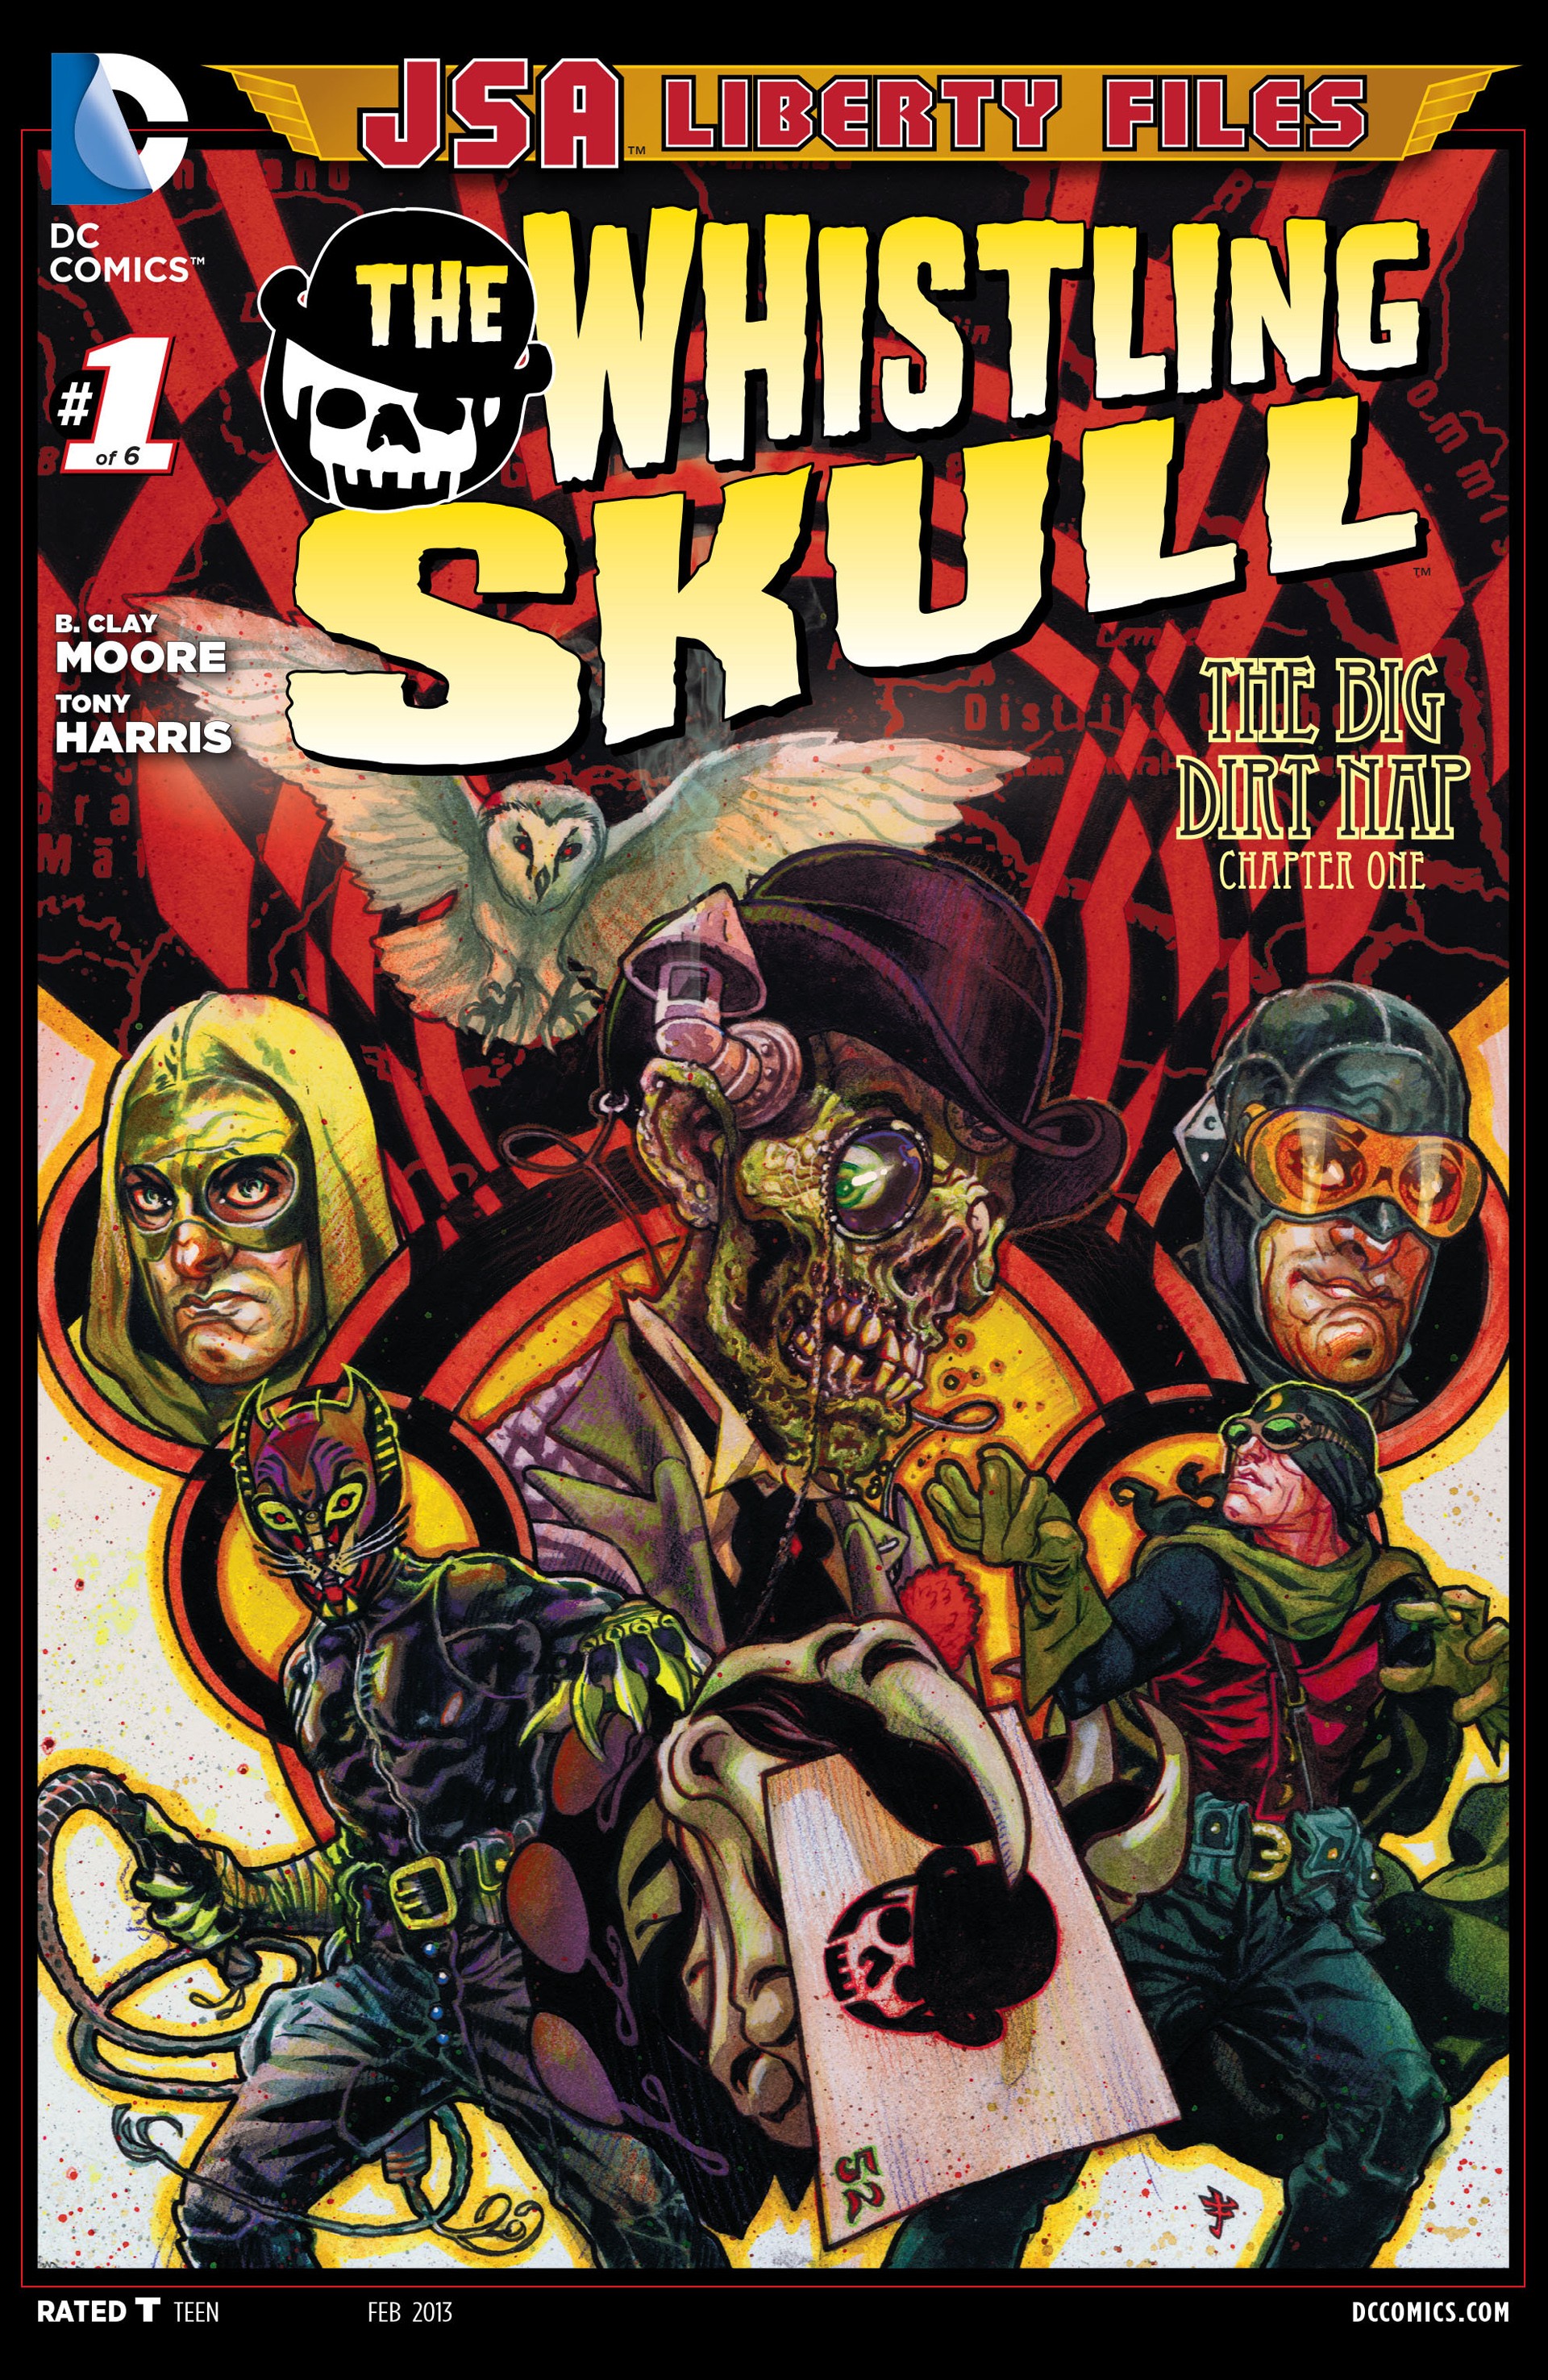 JSA Liberty Files: The Whistling Skull Vol. 1 #1